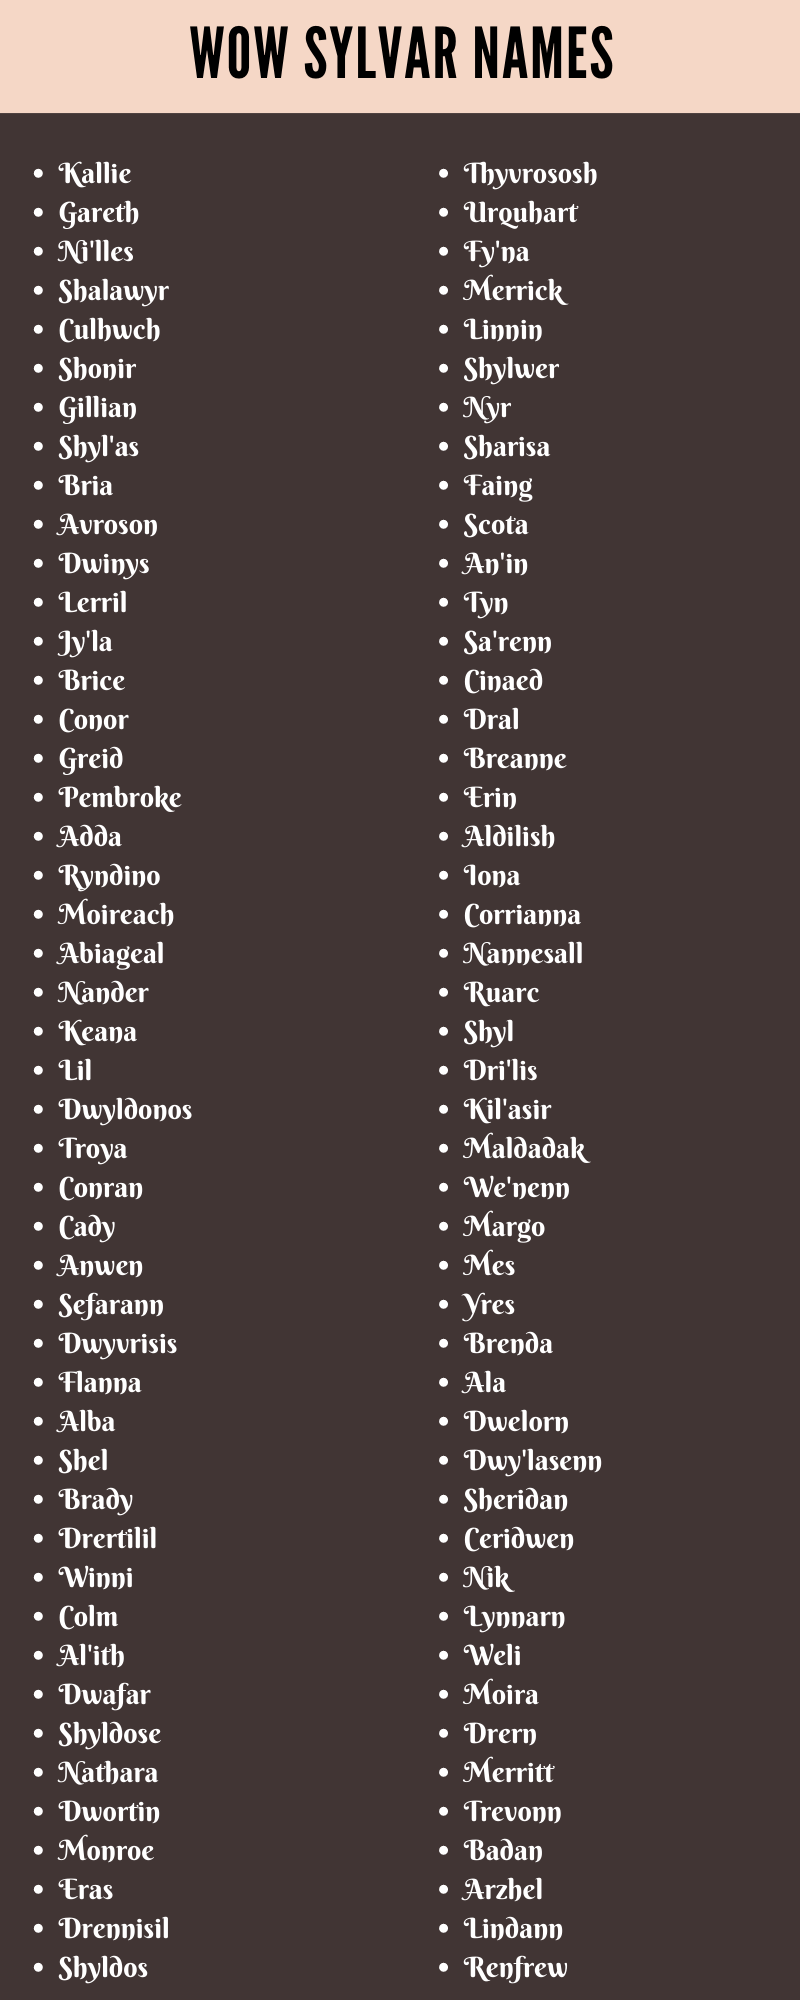 Wow Sylvar Names